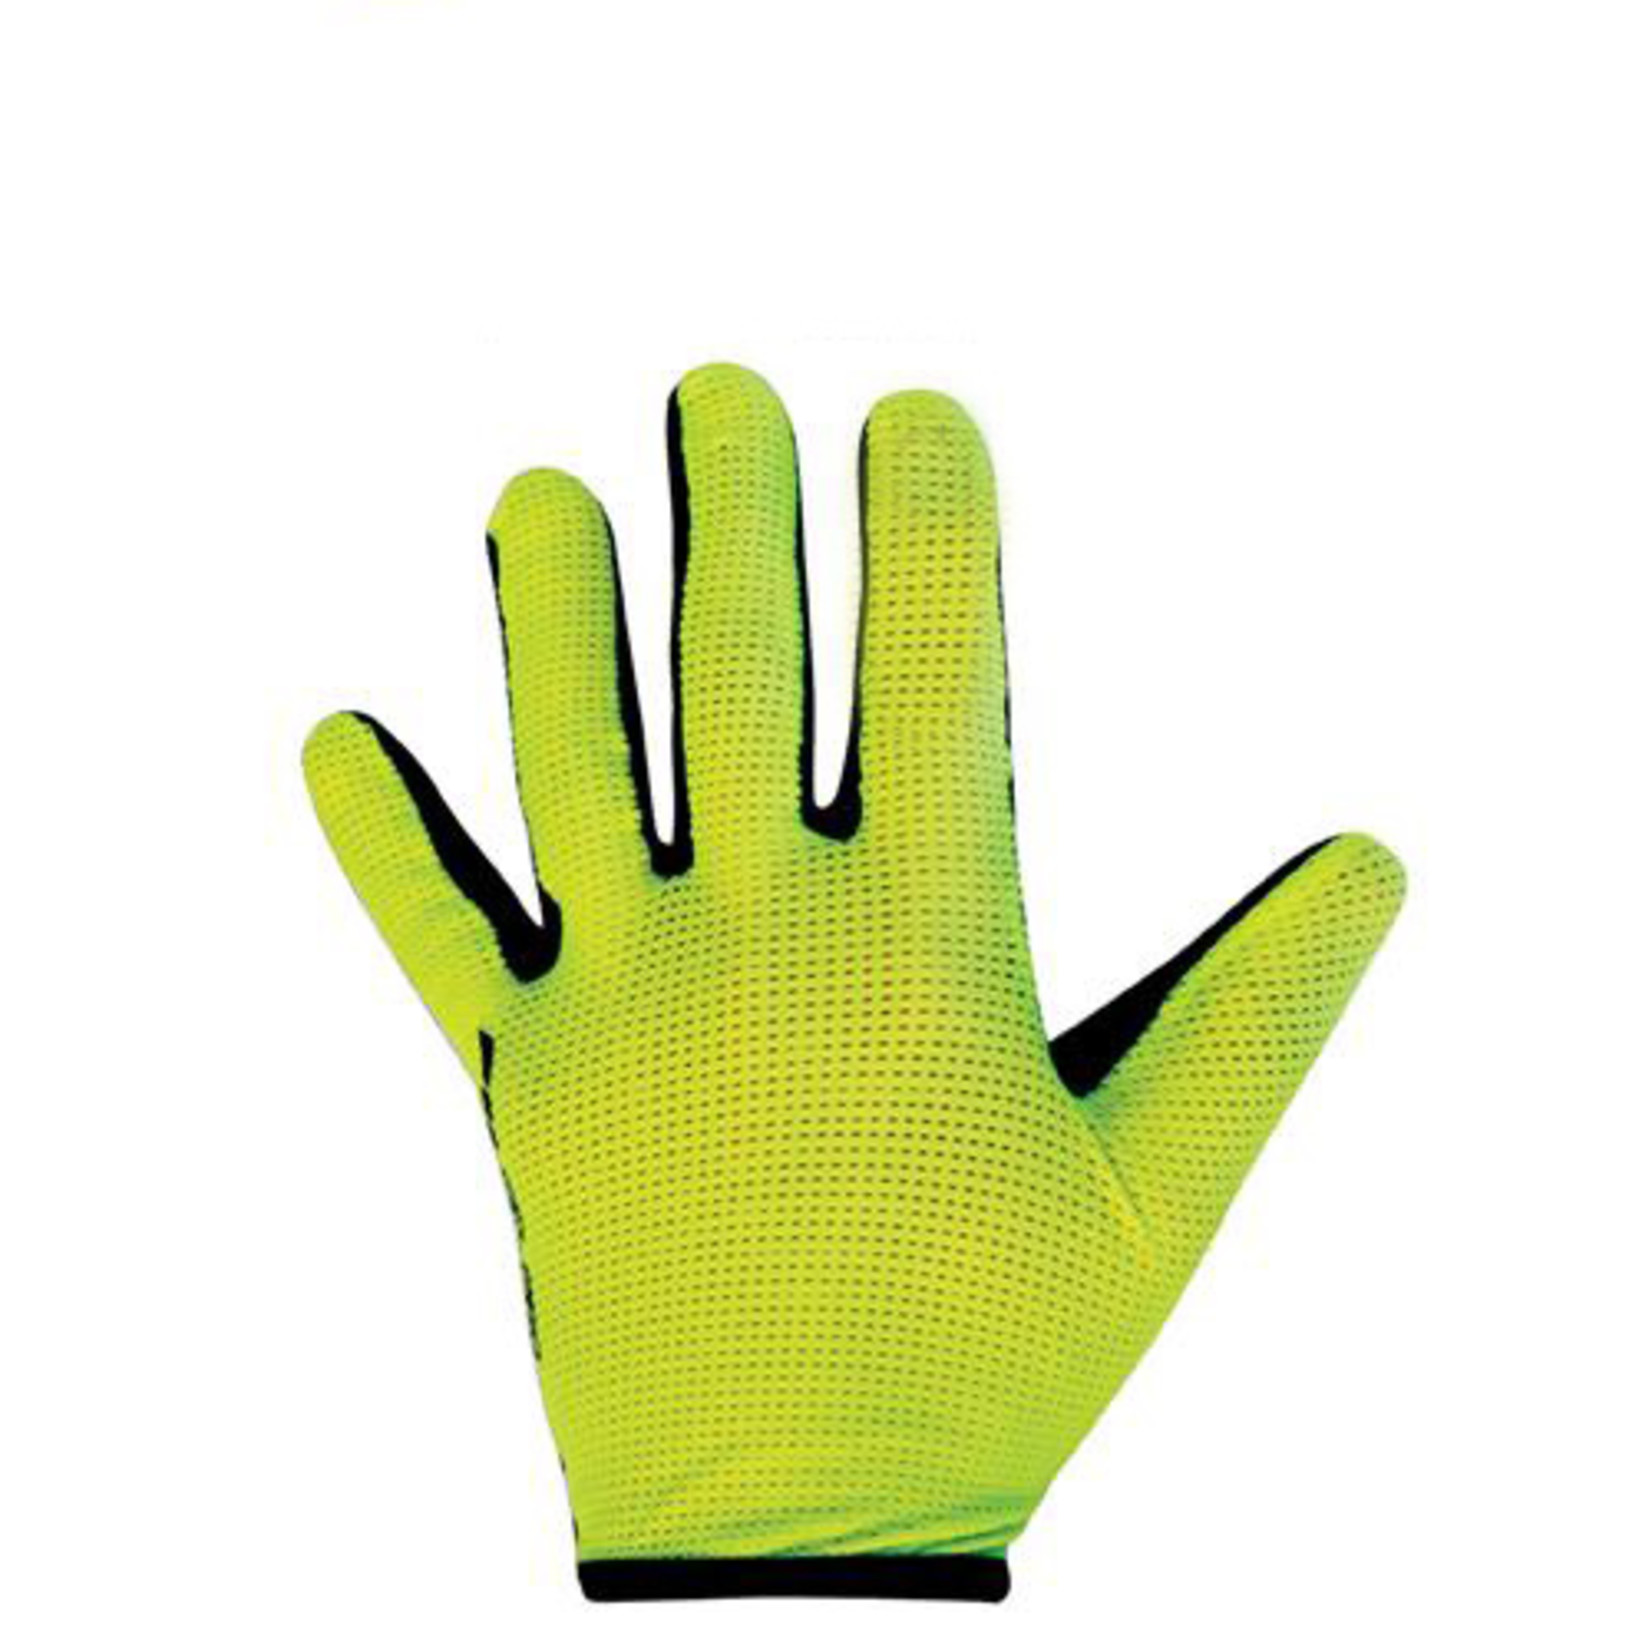 Azur Azur Bike/Cycling Glove - L30 Series - Breathable Fabric - Yellow - XX Large